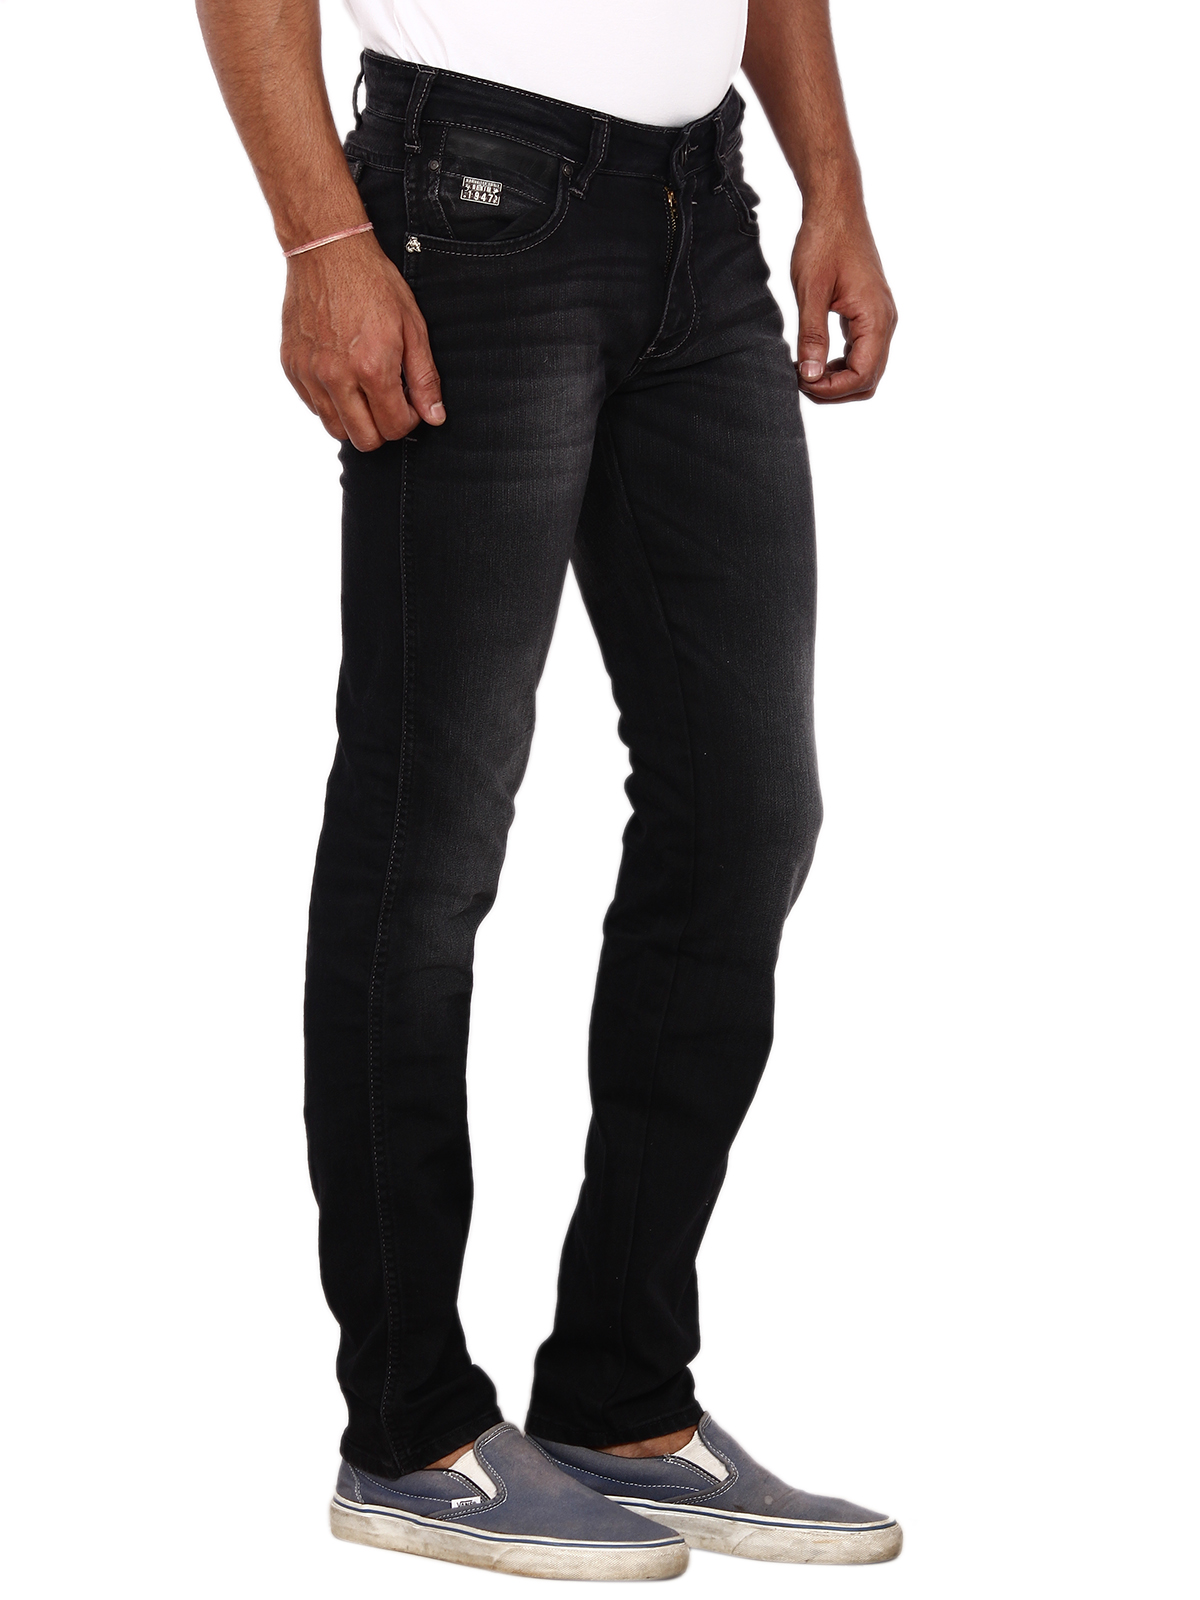 Buy Wrangler Skanders Leather Facing Jean Online @ ₹1847 from ShopClues